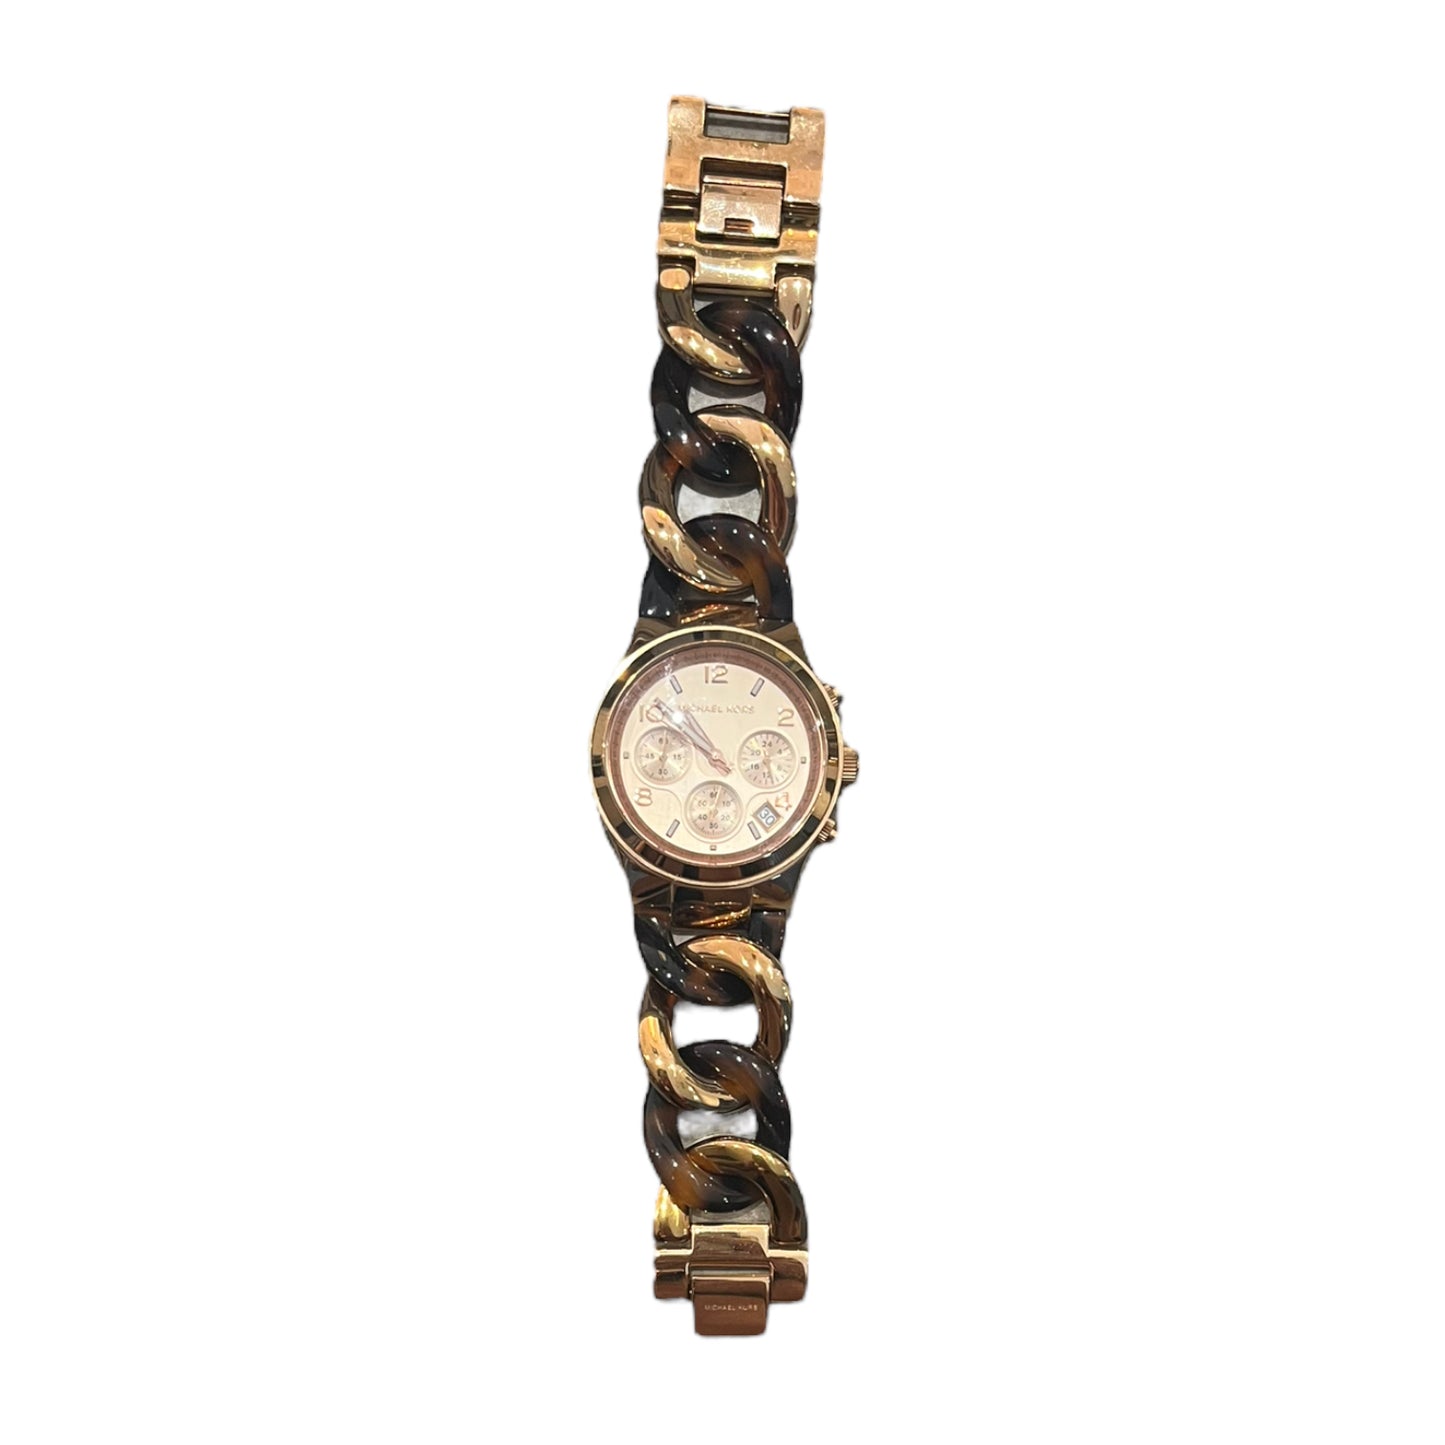 Michael Kors Rose Gold and Tortoiseshell Watch